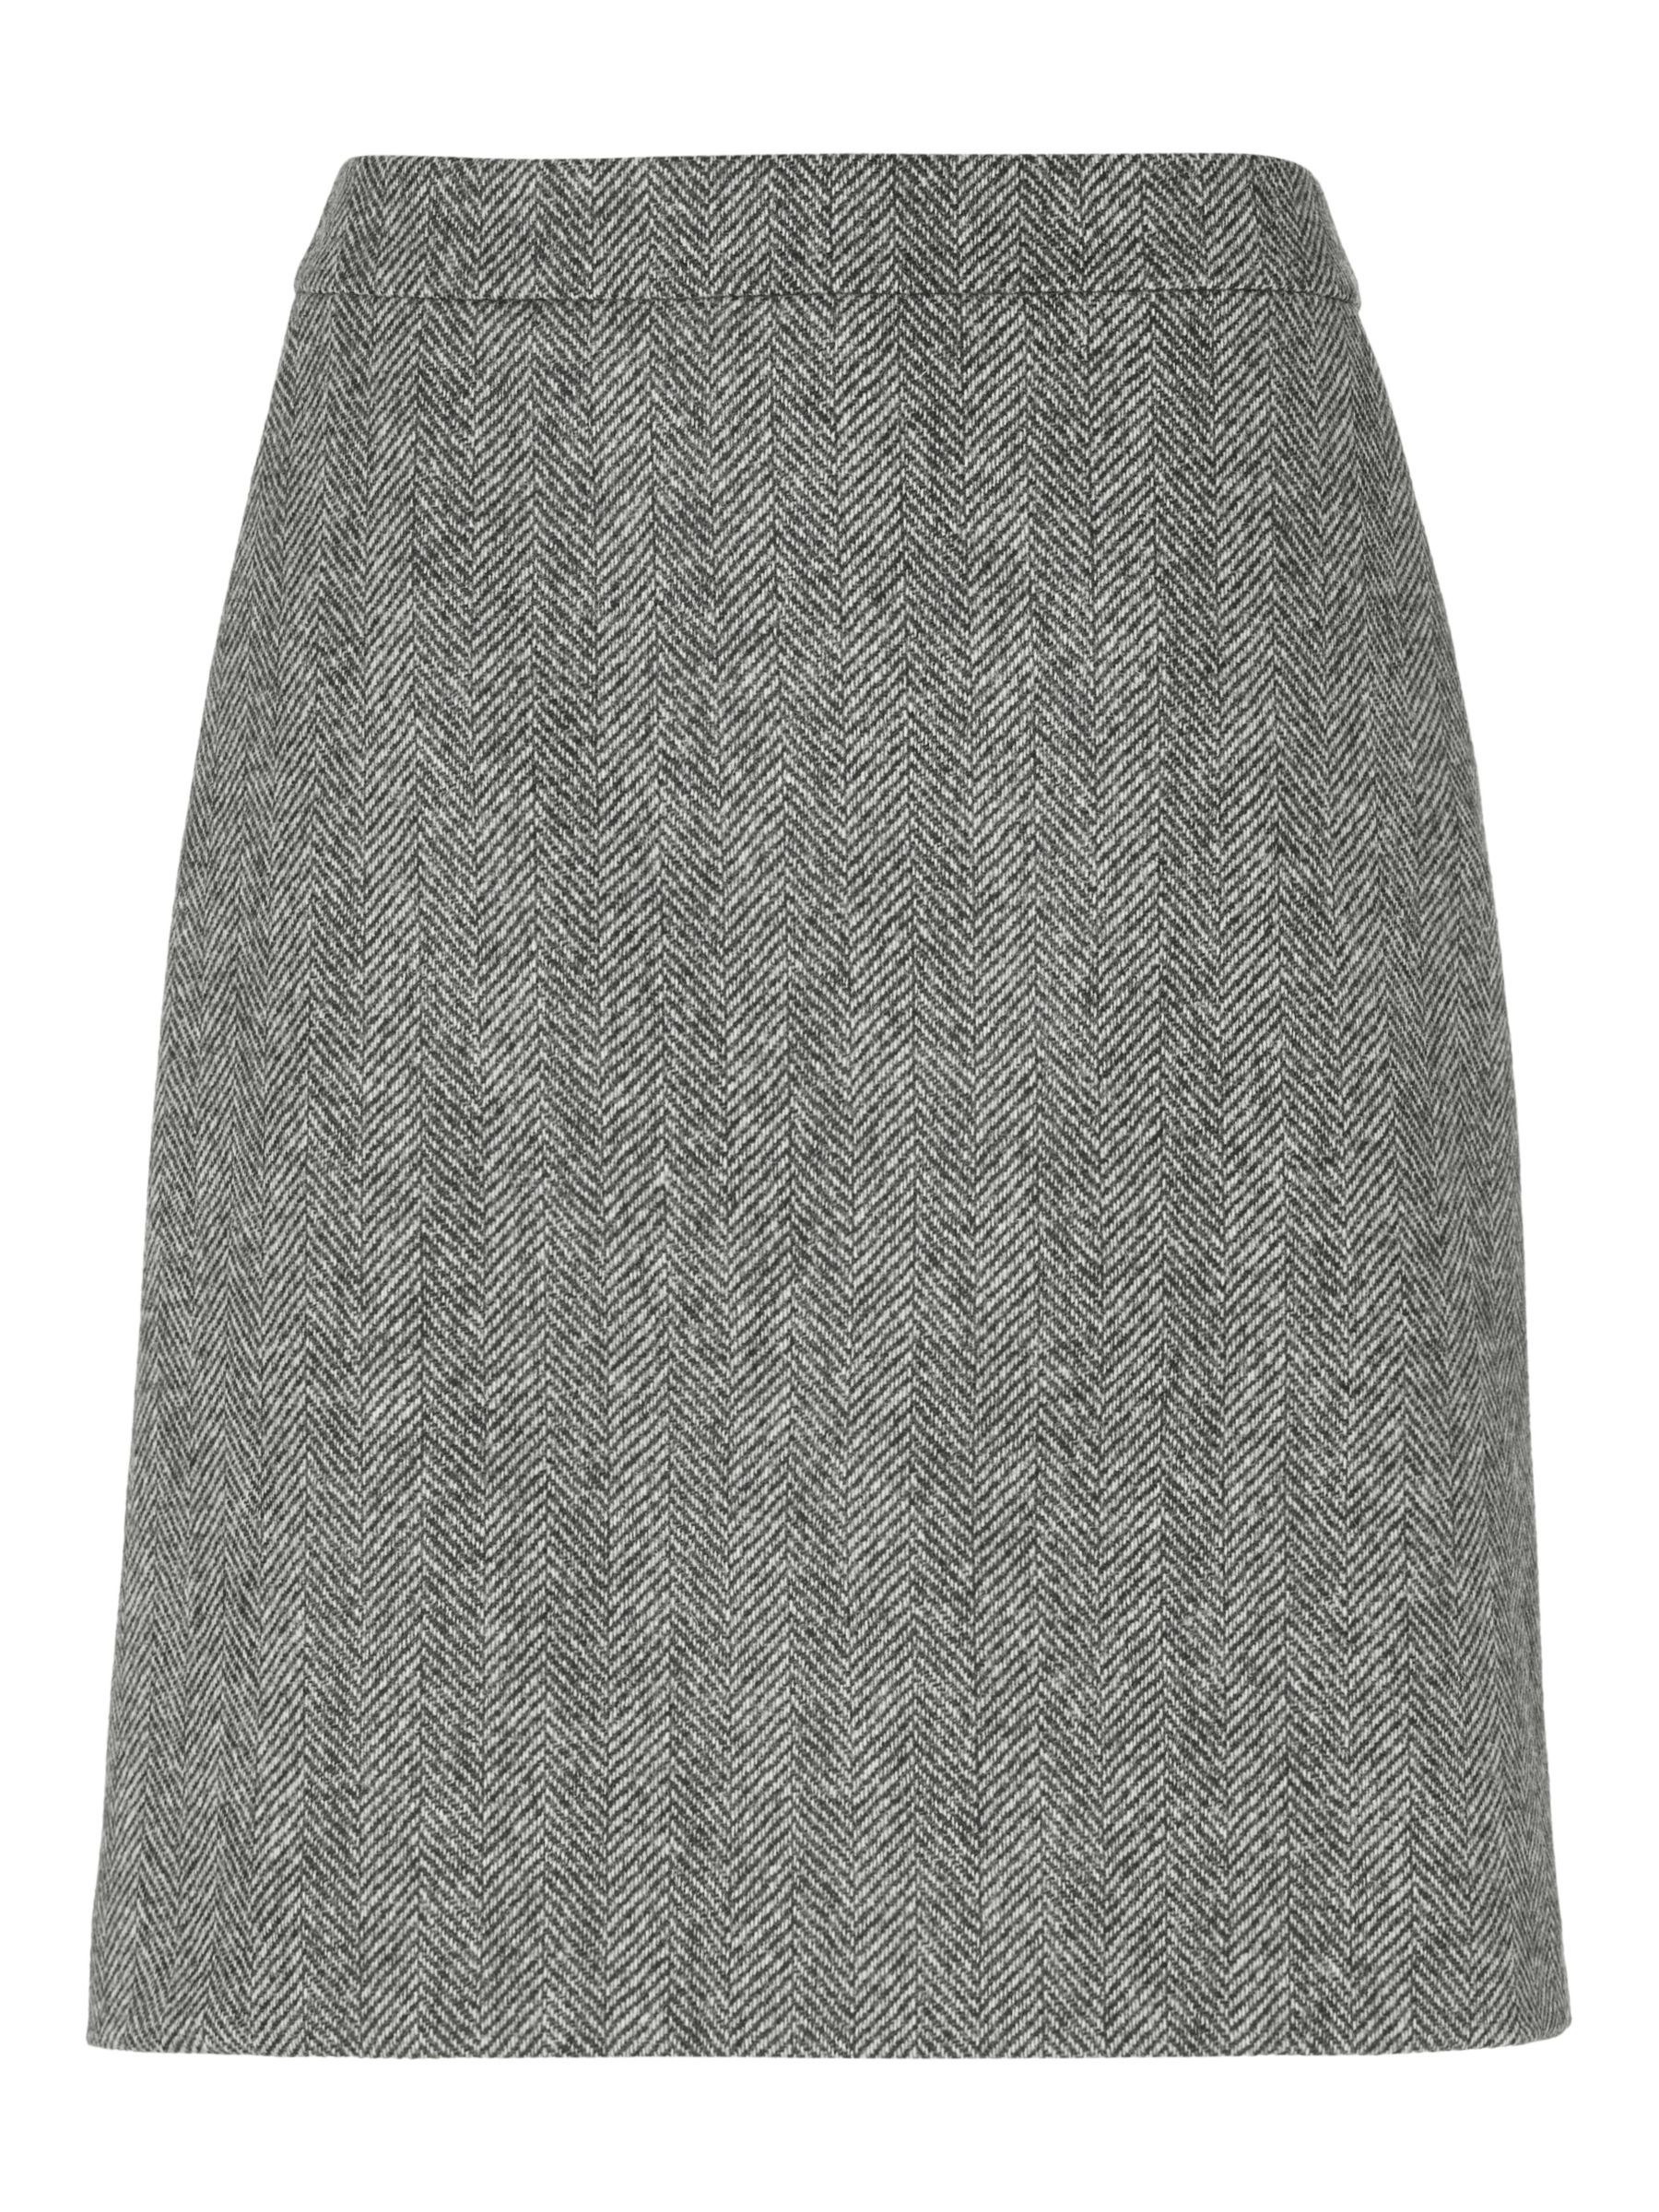 Boden British Tweed Skirt, Grey Herringbone